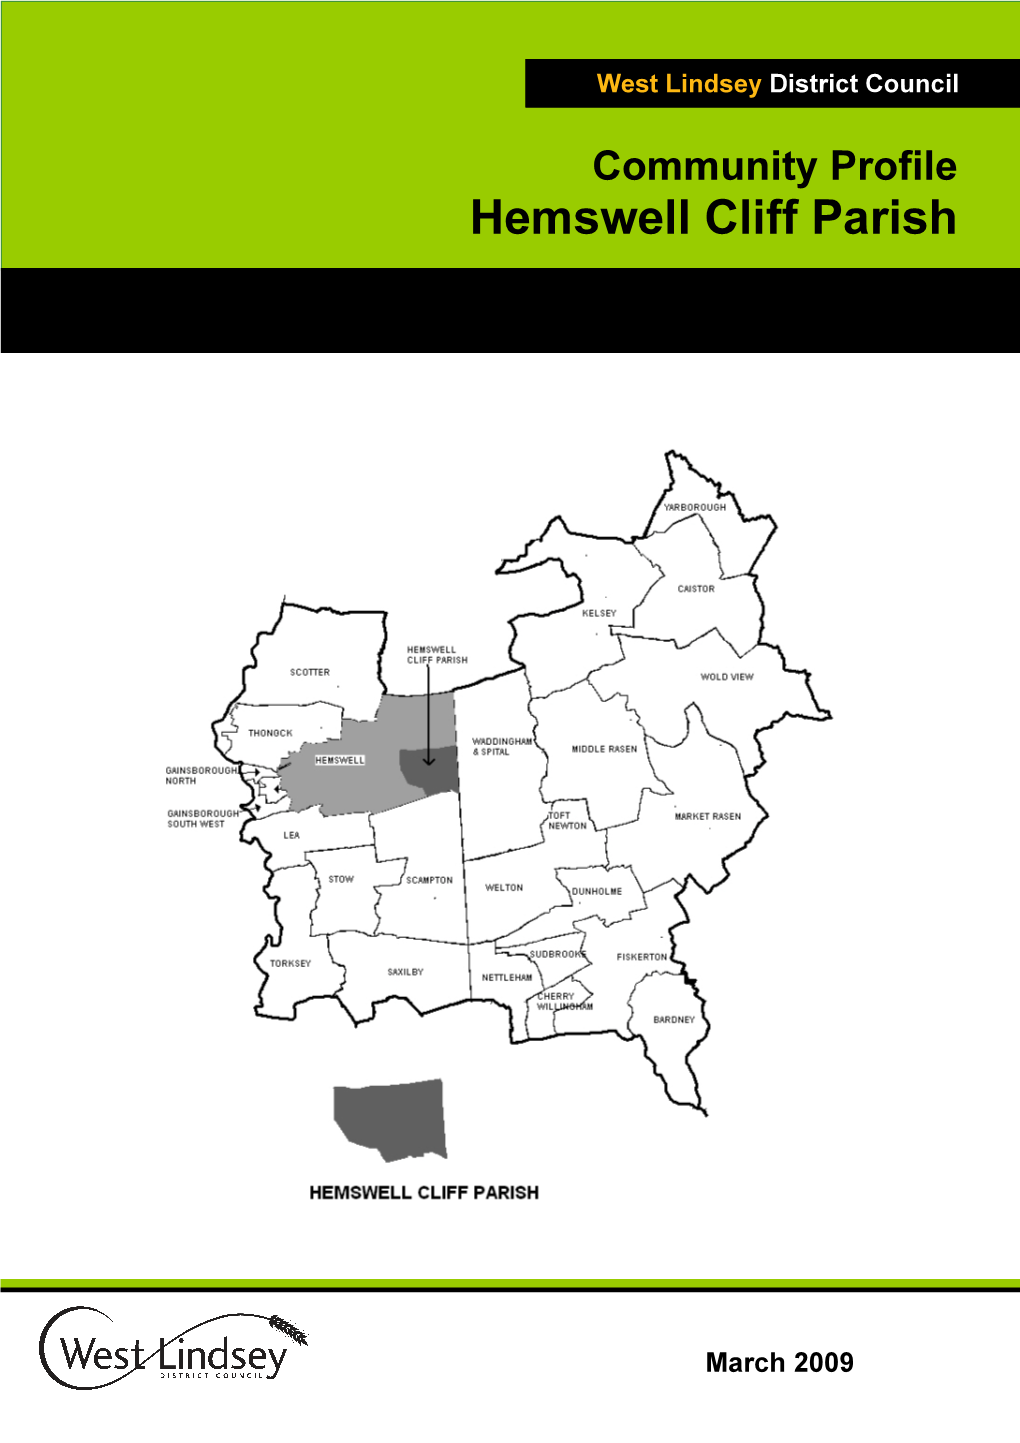 Hemswell Cliff Parish